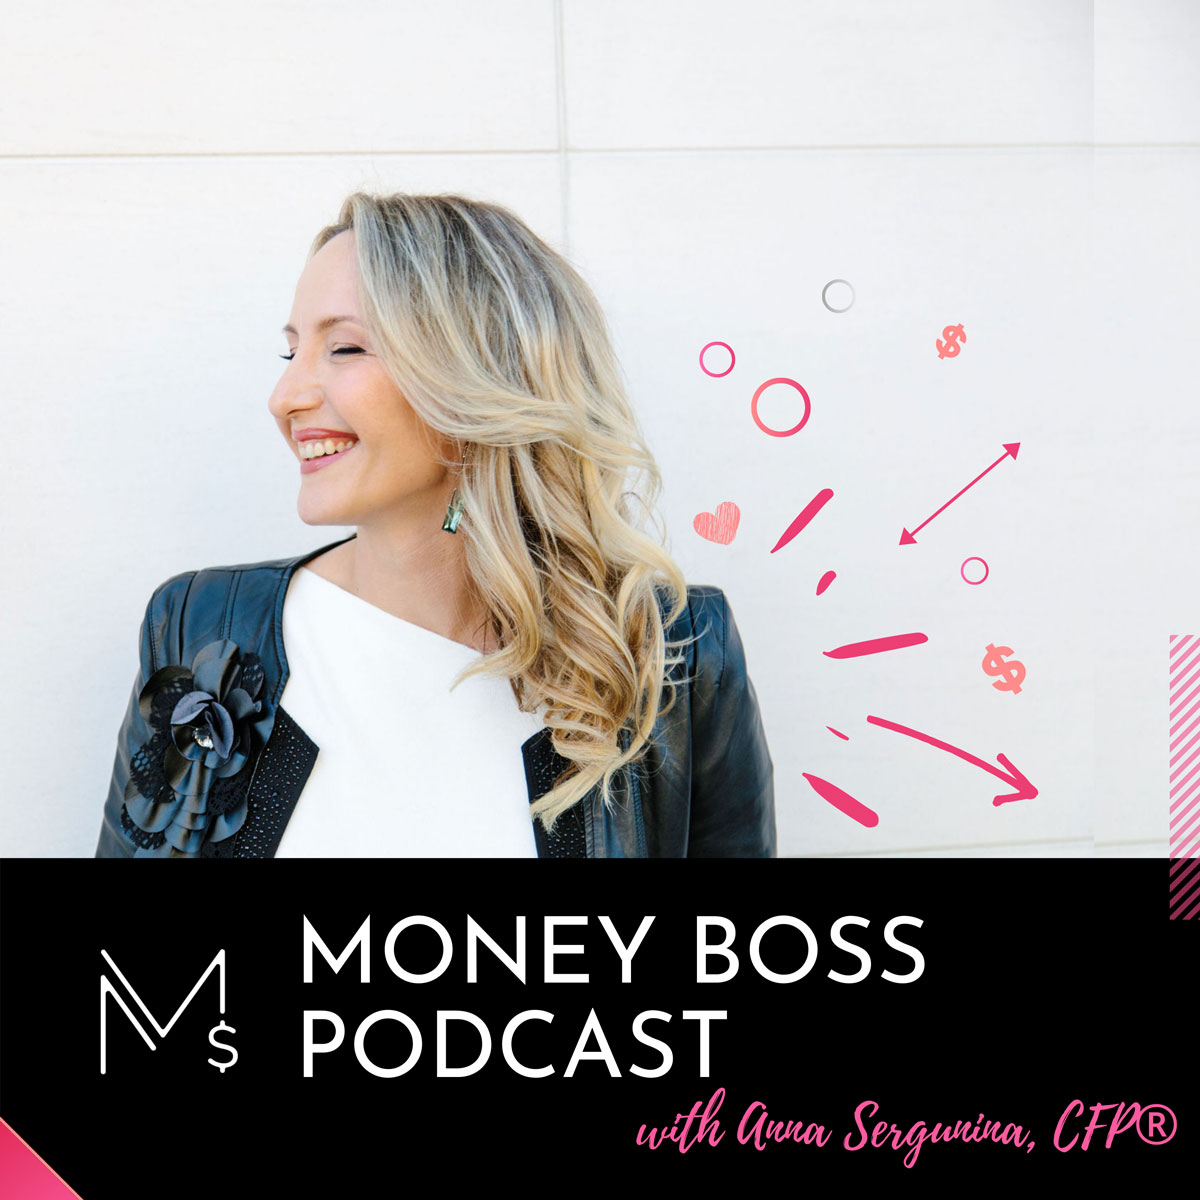 Money Boss Podcast with Anna Sergunina